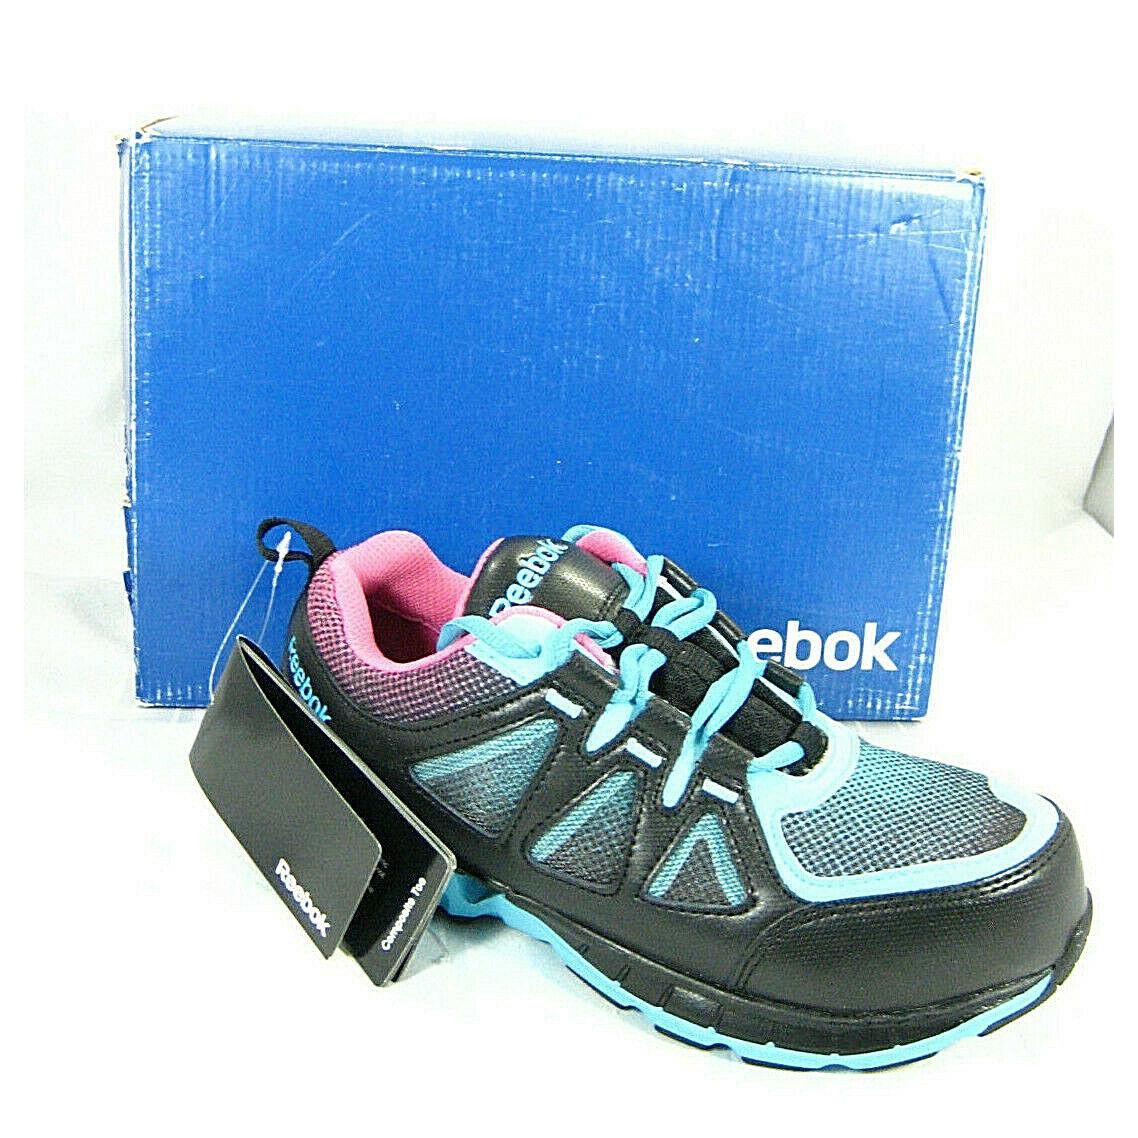 Reebok Womens Black Athletic Composite Toe Work Hiking Shoe 7 W RB325 Zigkick